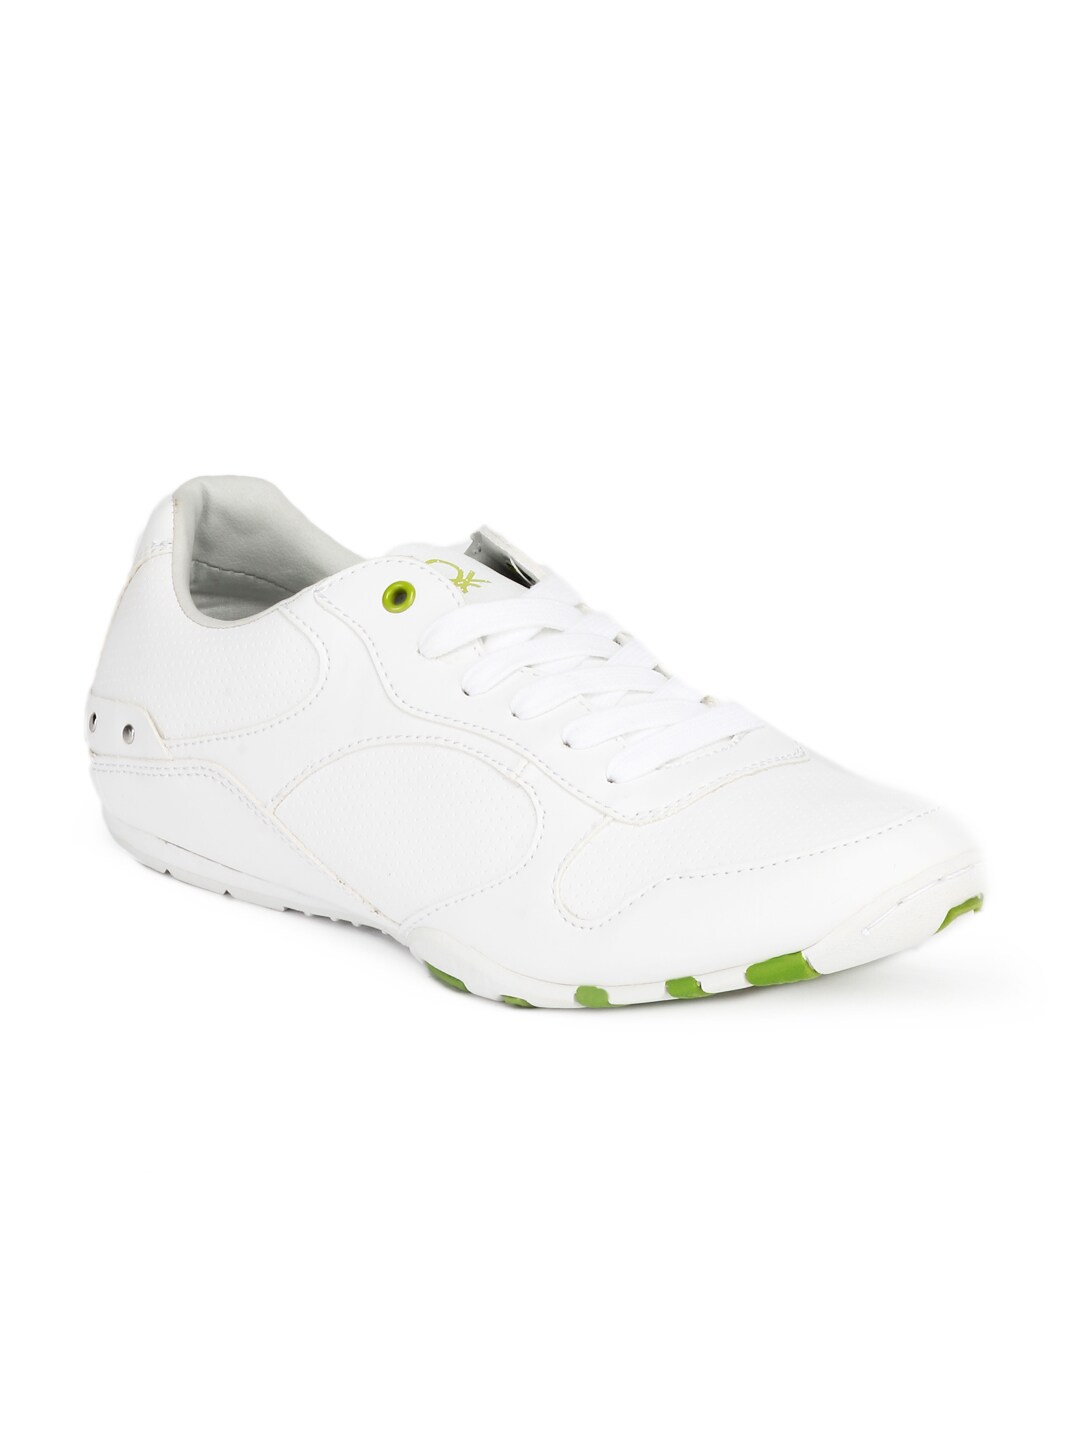 United Colors of Benetton Men White Shoes